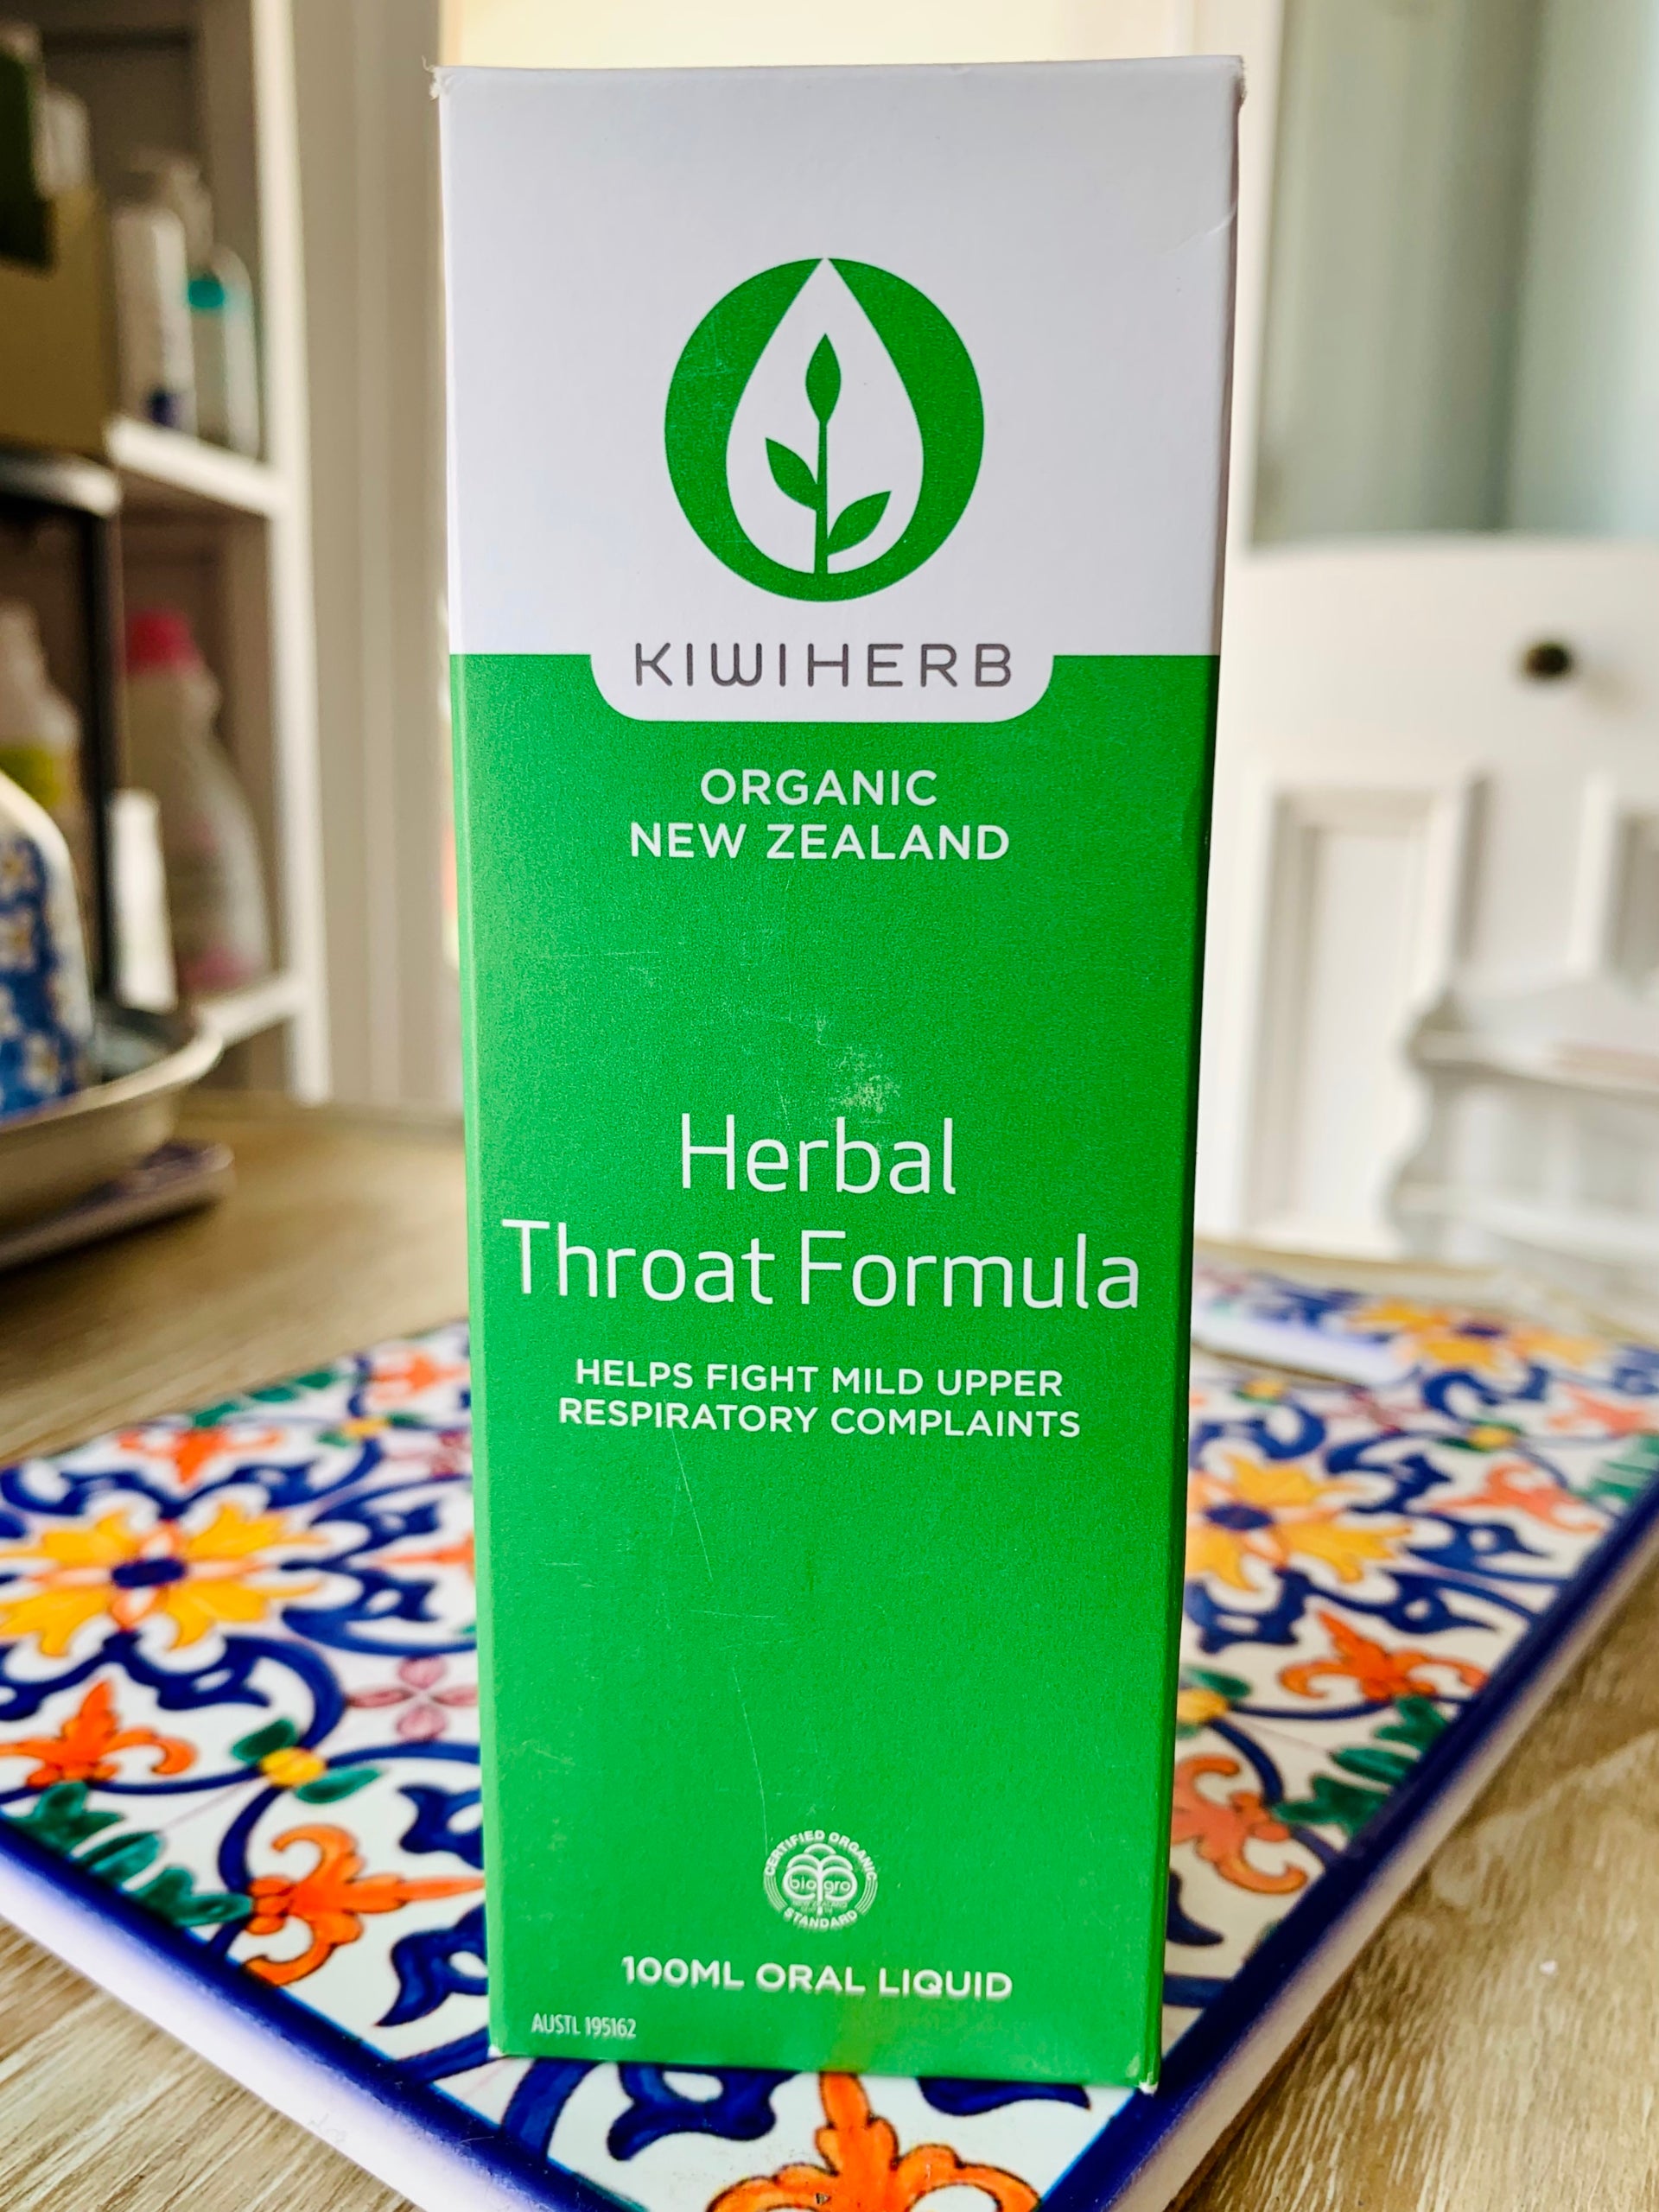 Kiwiherb Organic Herbal Throat Formula